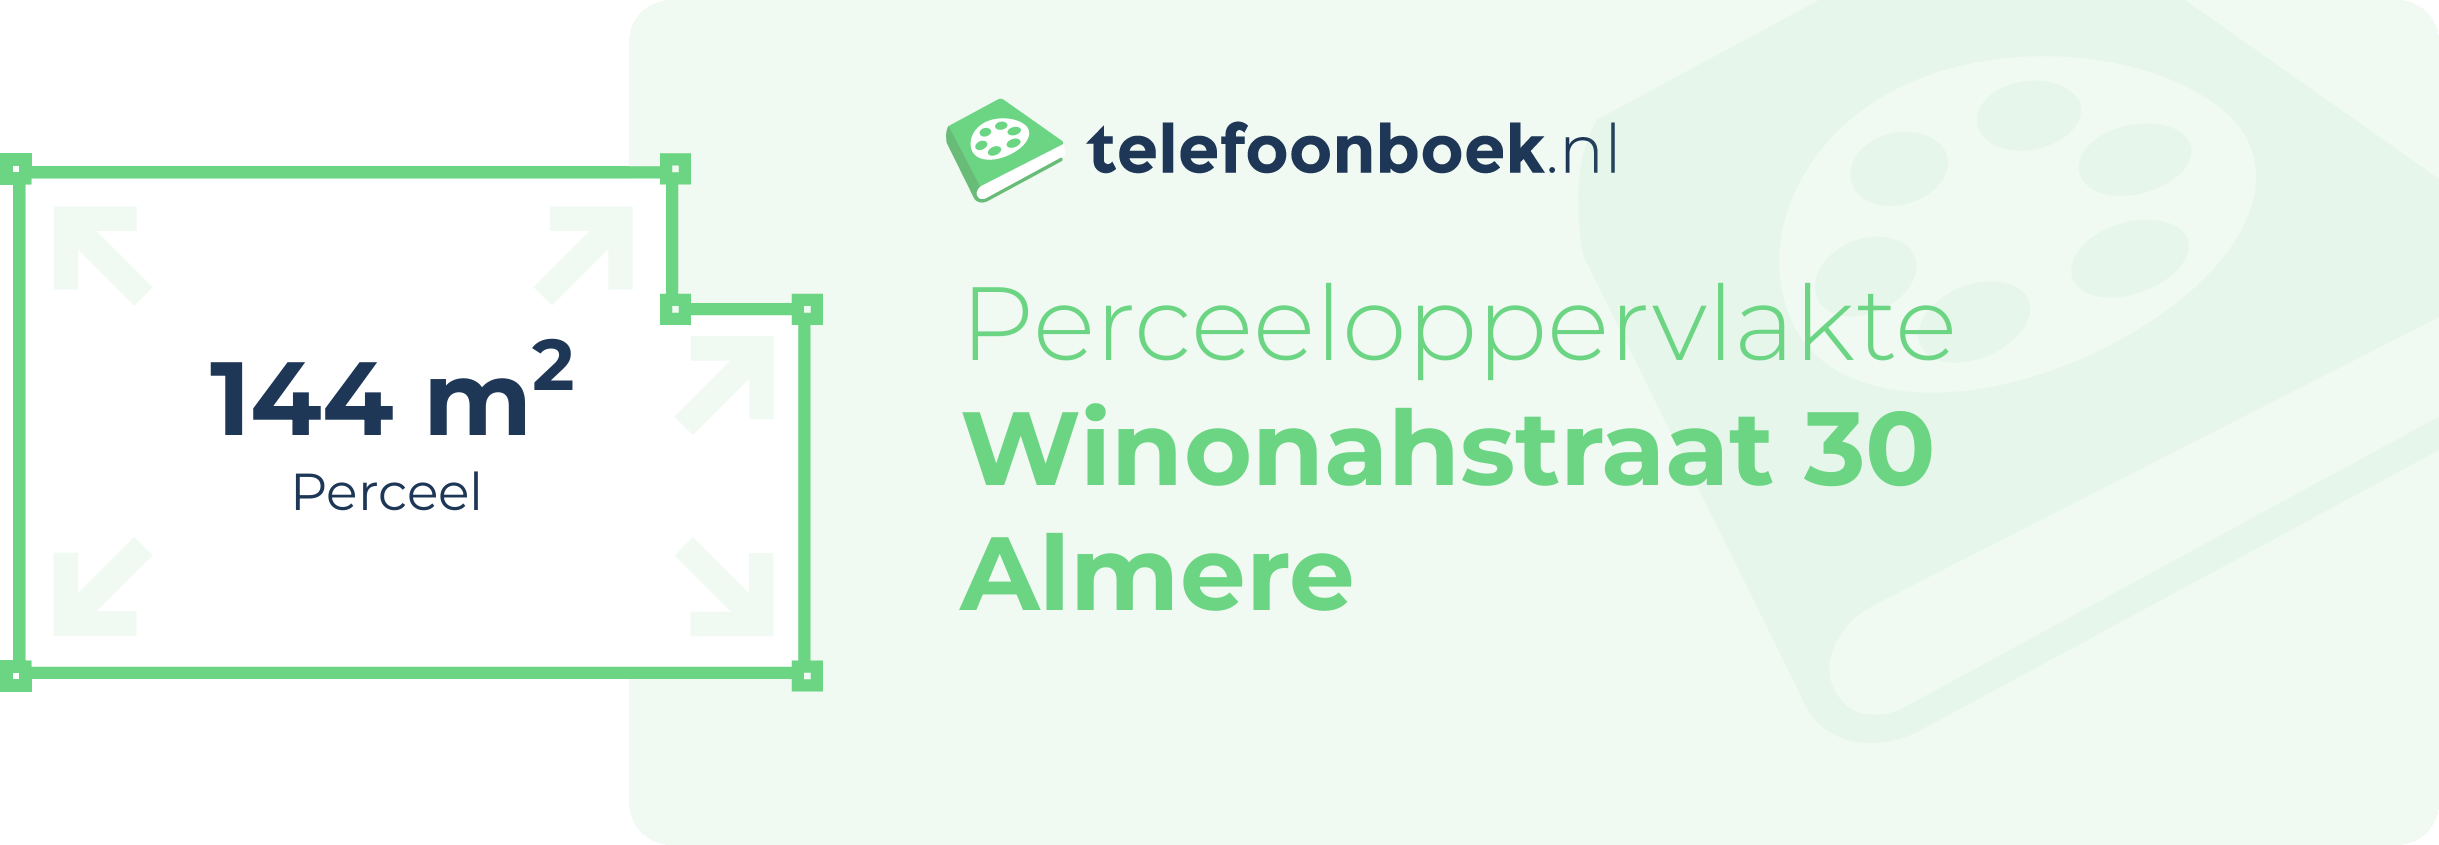 Perceeloppervlakte Winonahstraat 30 Almere